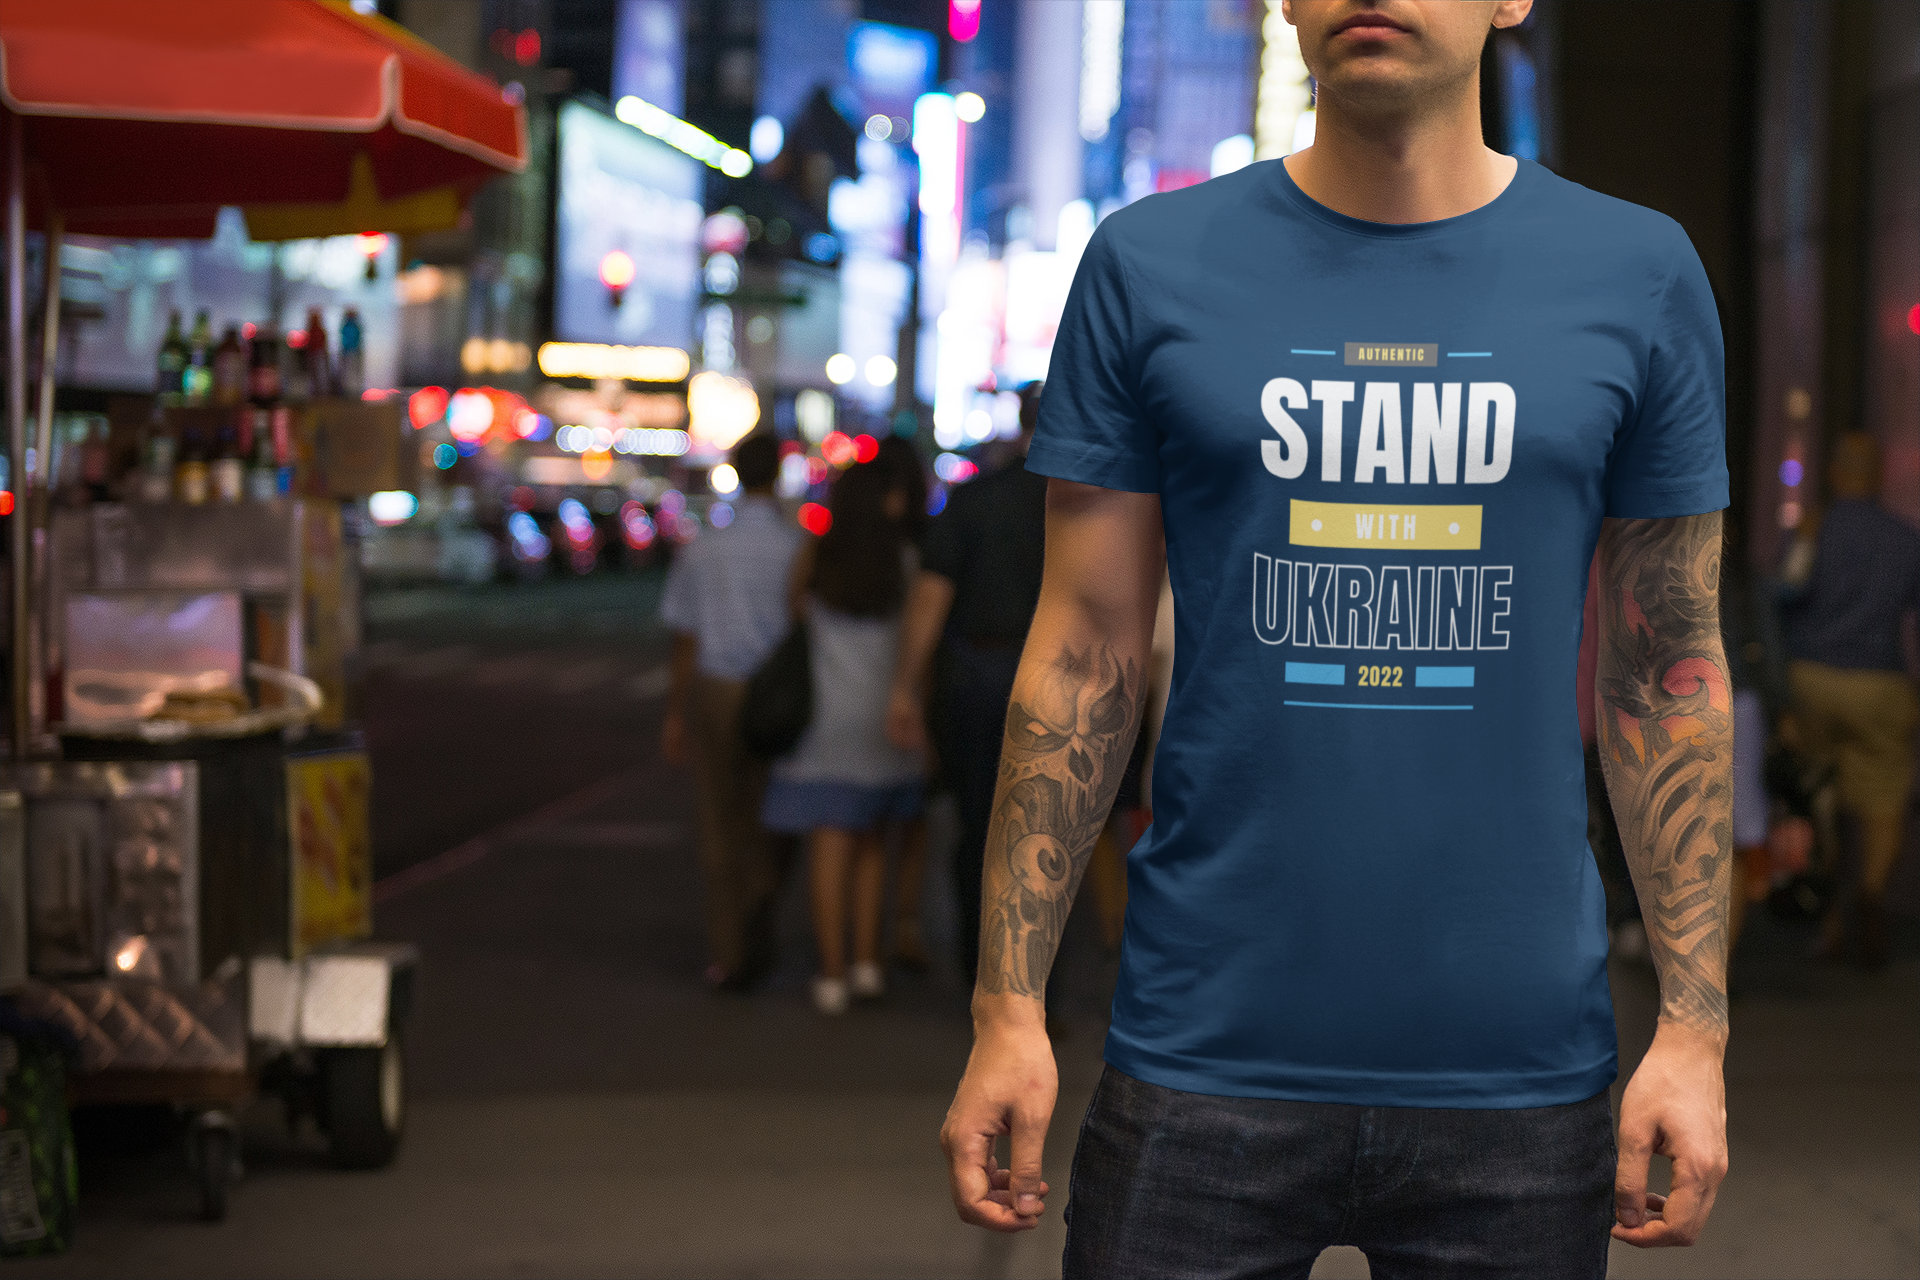 Ukraina under attack, Zelenskyy President of Ukraine, Show solidarity with Ukraine. T-Shirt Stand with Ukraine